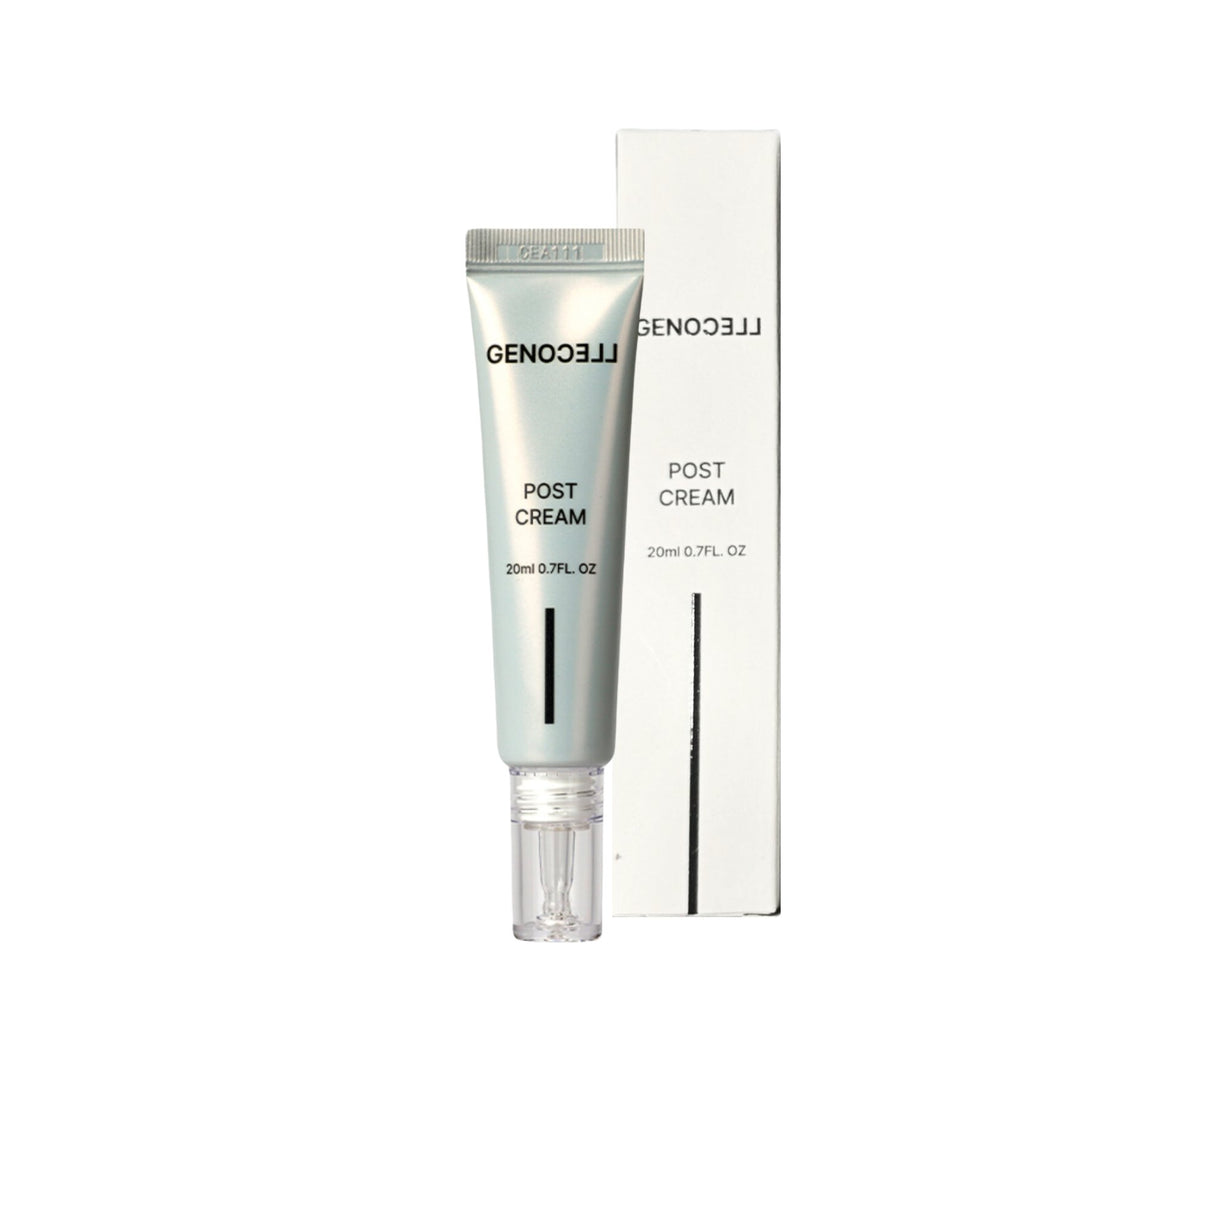 Post Cream for sensitive skin - Filler Lux™ - SKIN CARE - Genocell